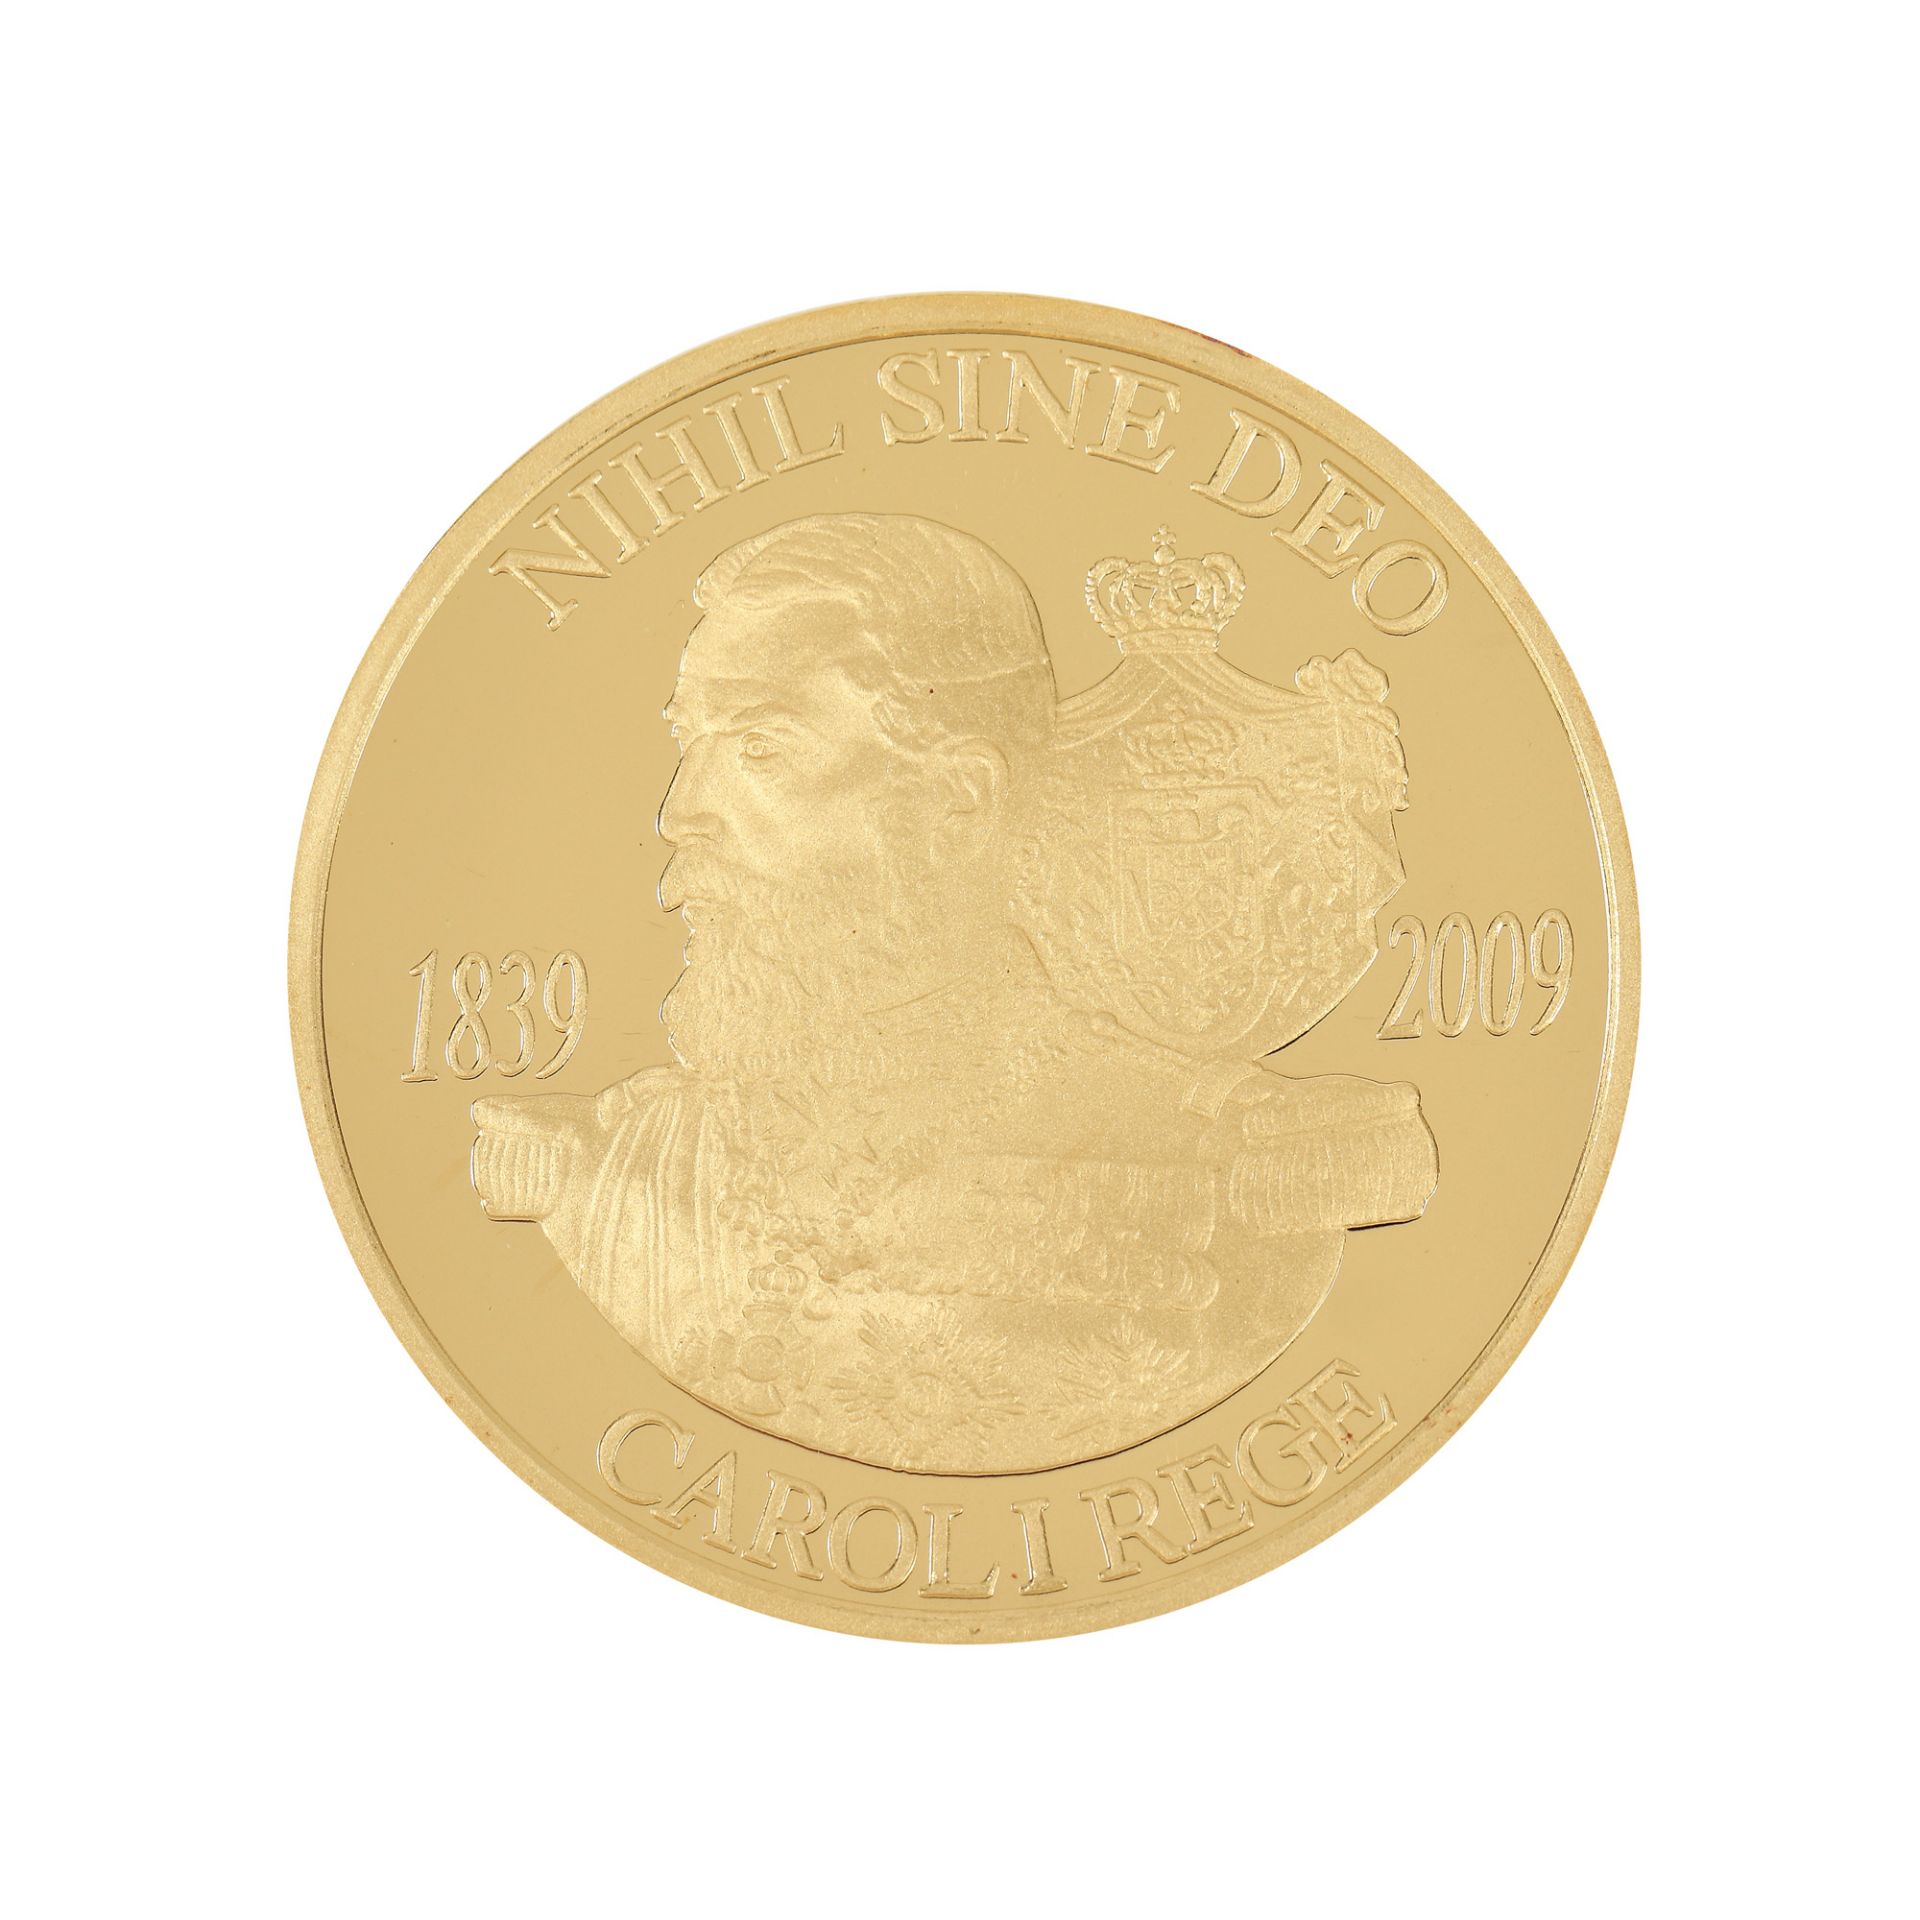 BNR commemorative coin, Carol I 1839-2009, gold